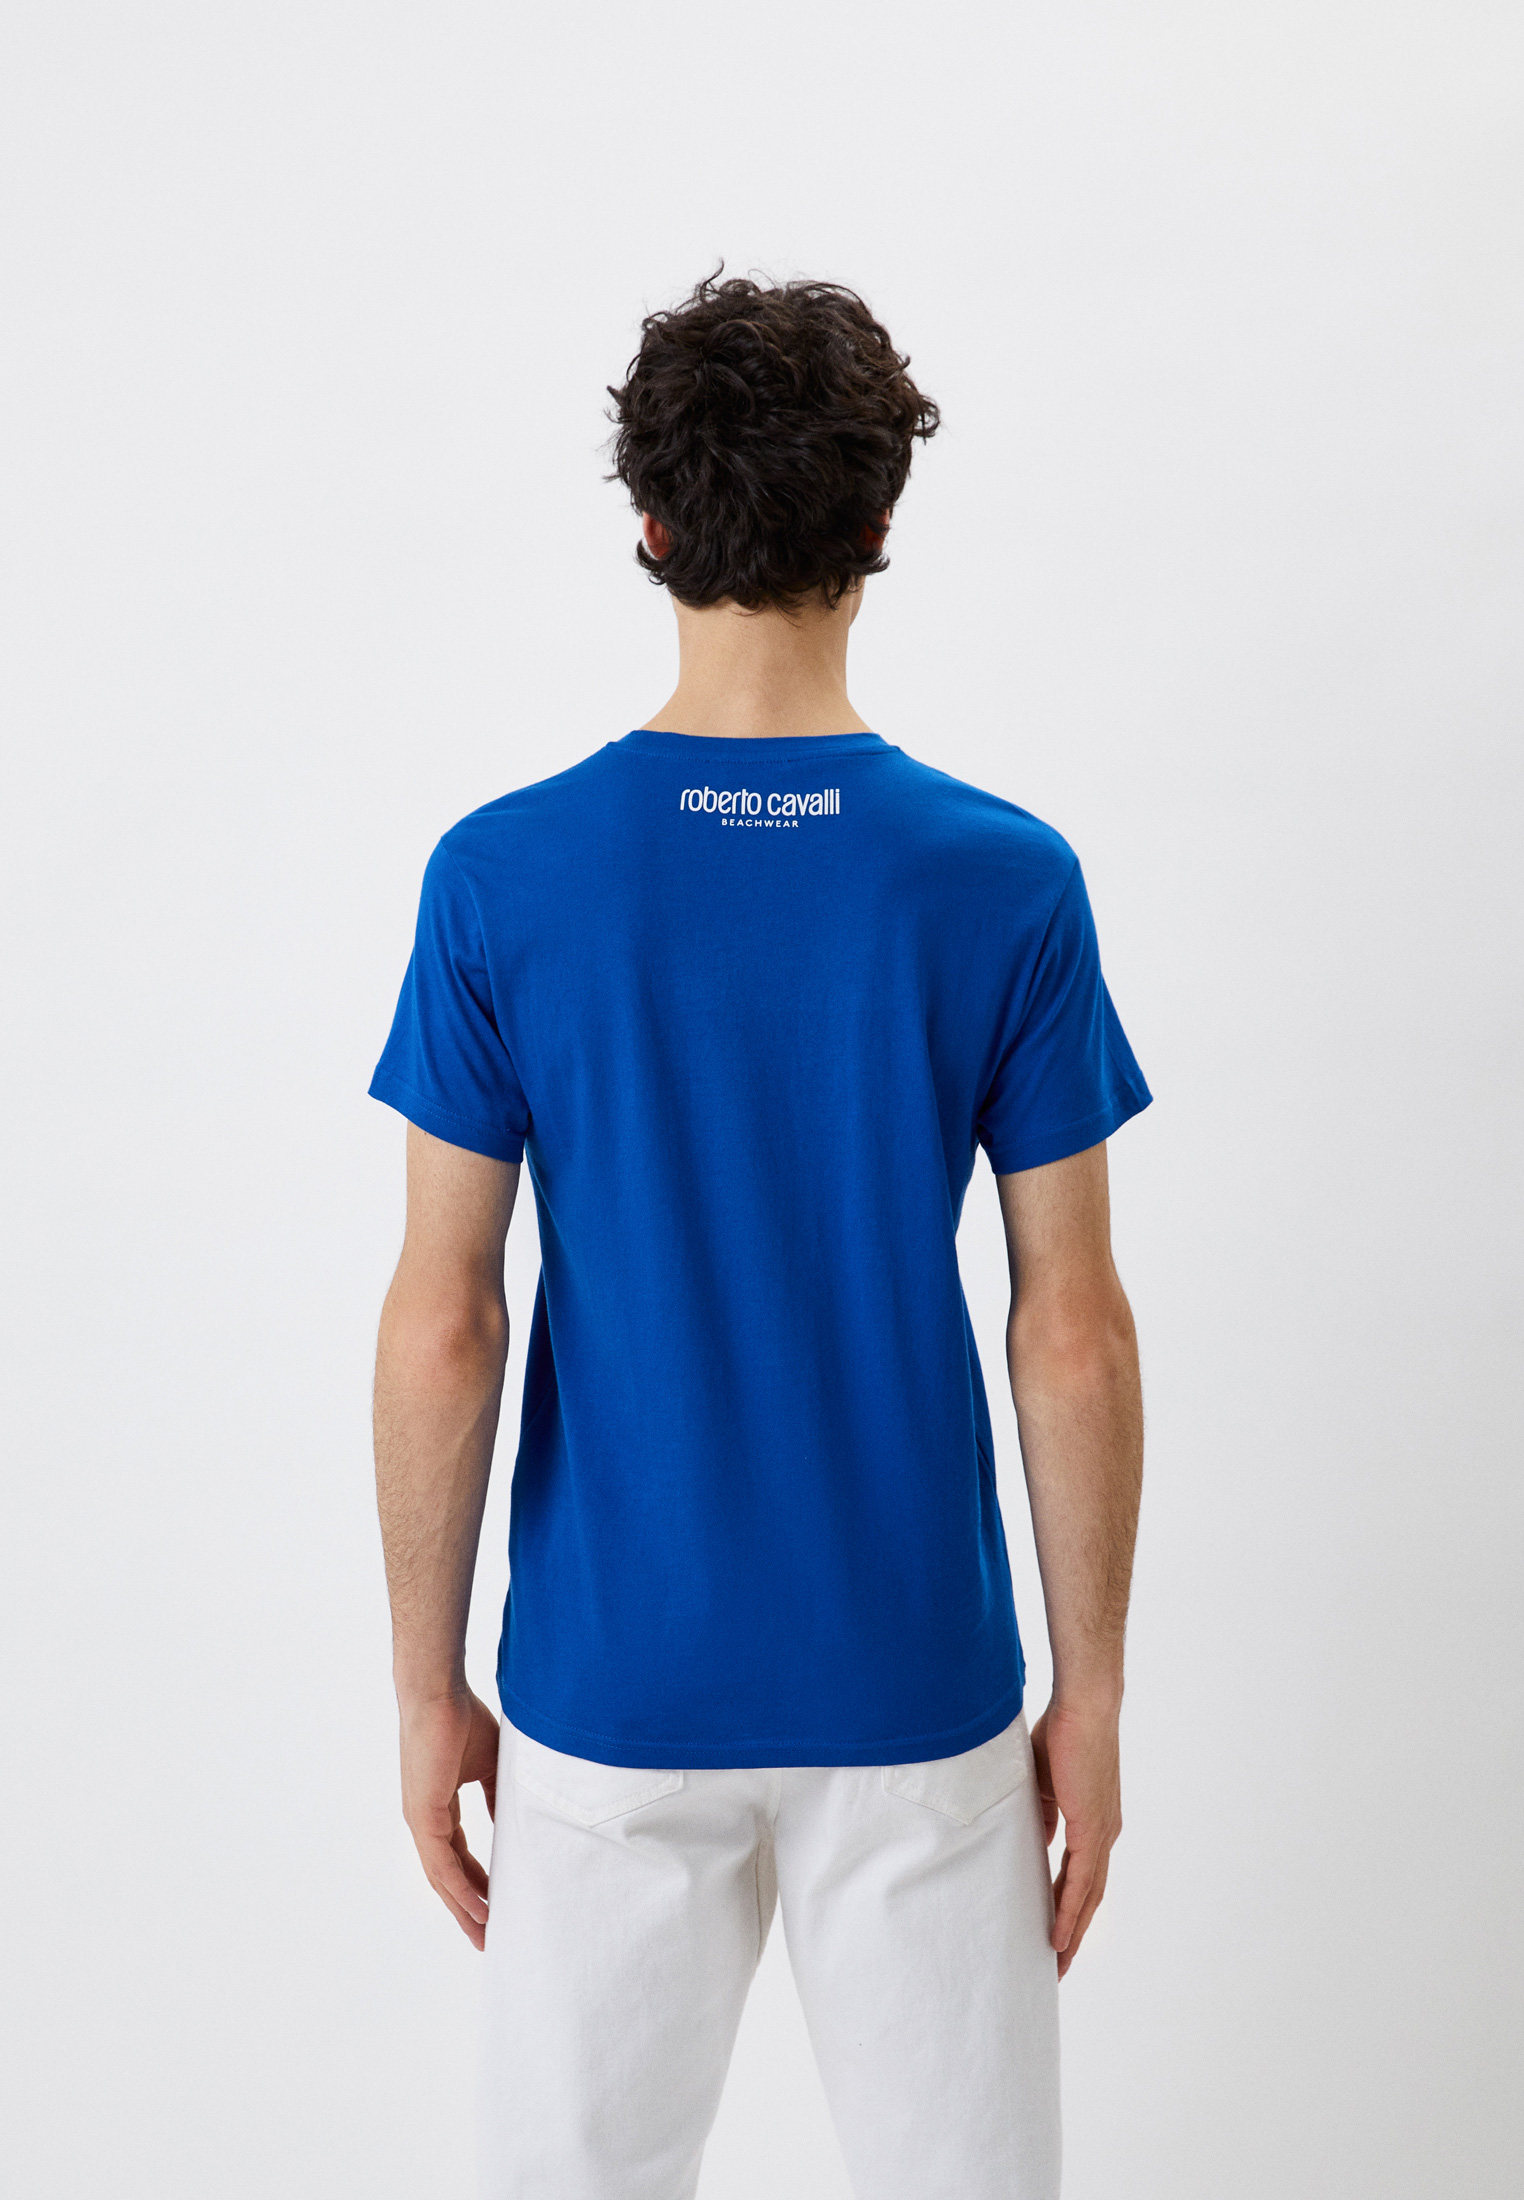 Мужская футболка Roberto Cavalli (Роберто Кавалли) HSH01T: изображение 6